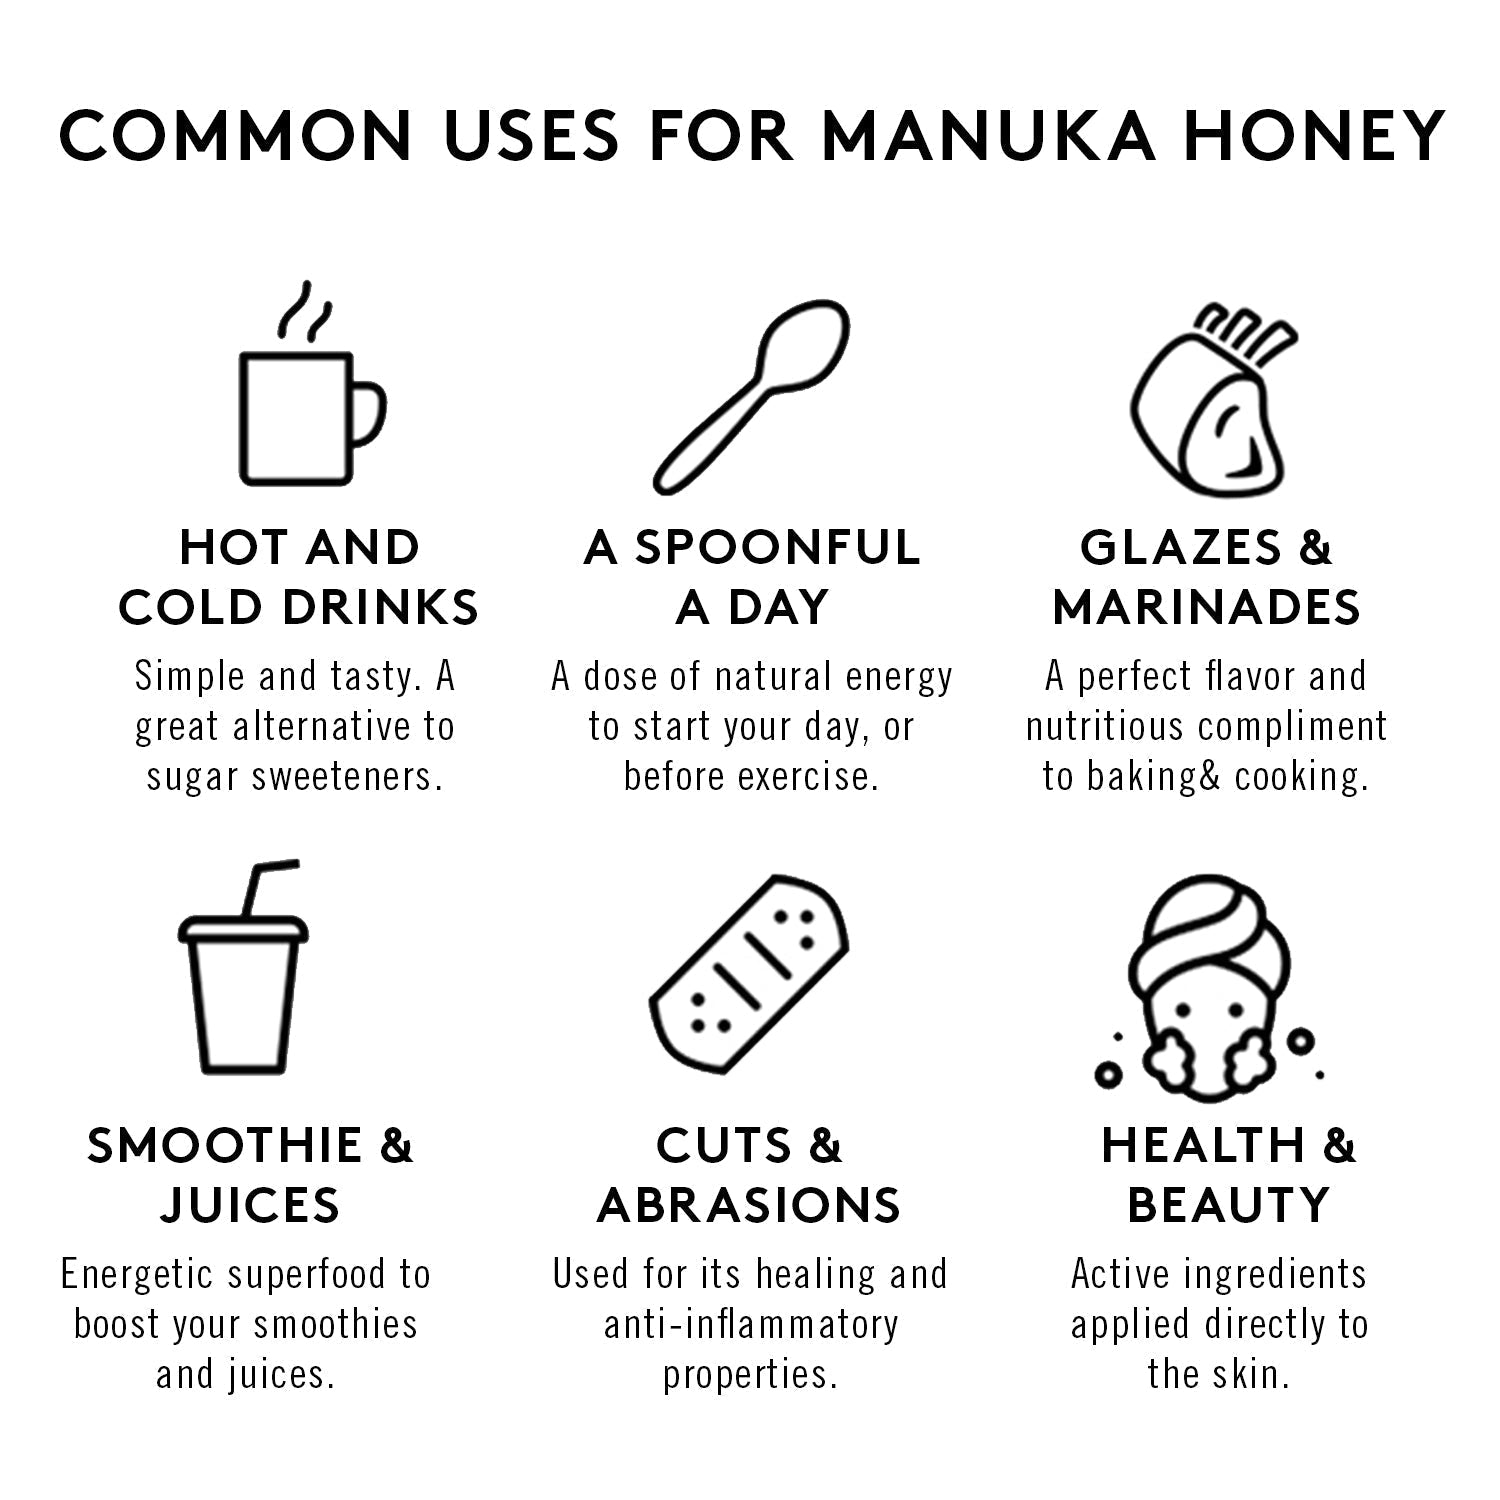 Manuka Honig UMF™ 10+ | MGO 263+ - New Zealand Honey Co. DE